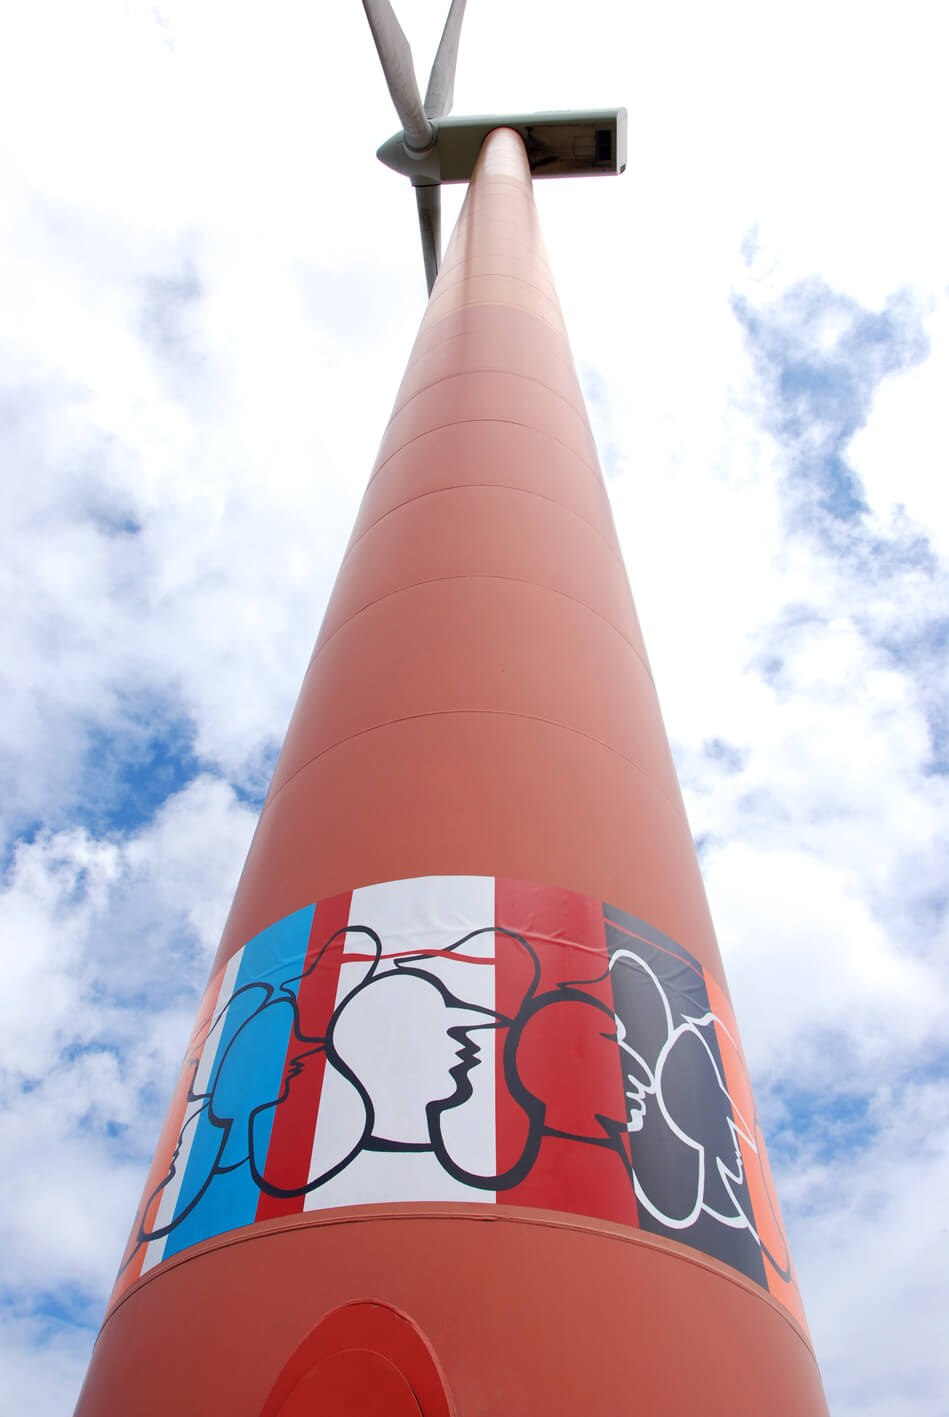 Art on a windmill Gea Zwart winner Nuon Vattenfall bubbleprojects painting around the mast of a windmill